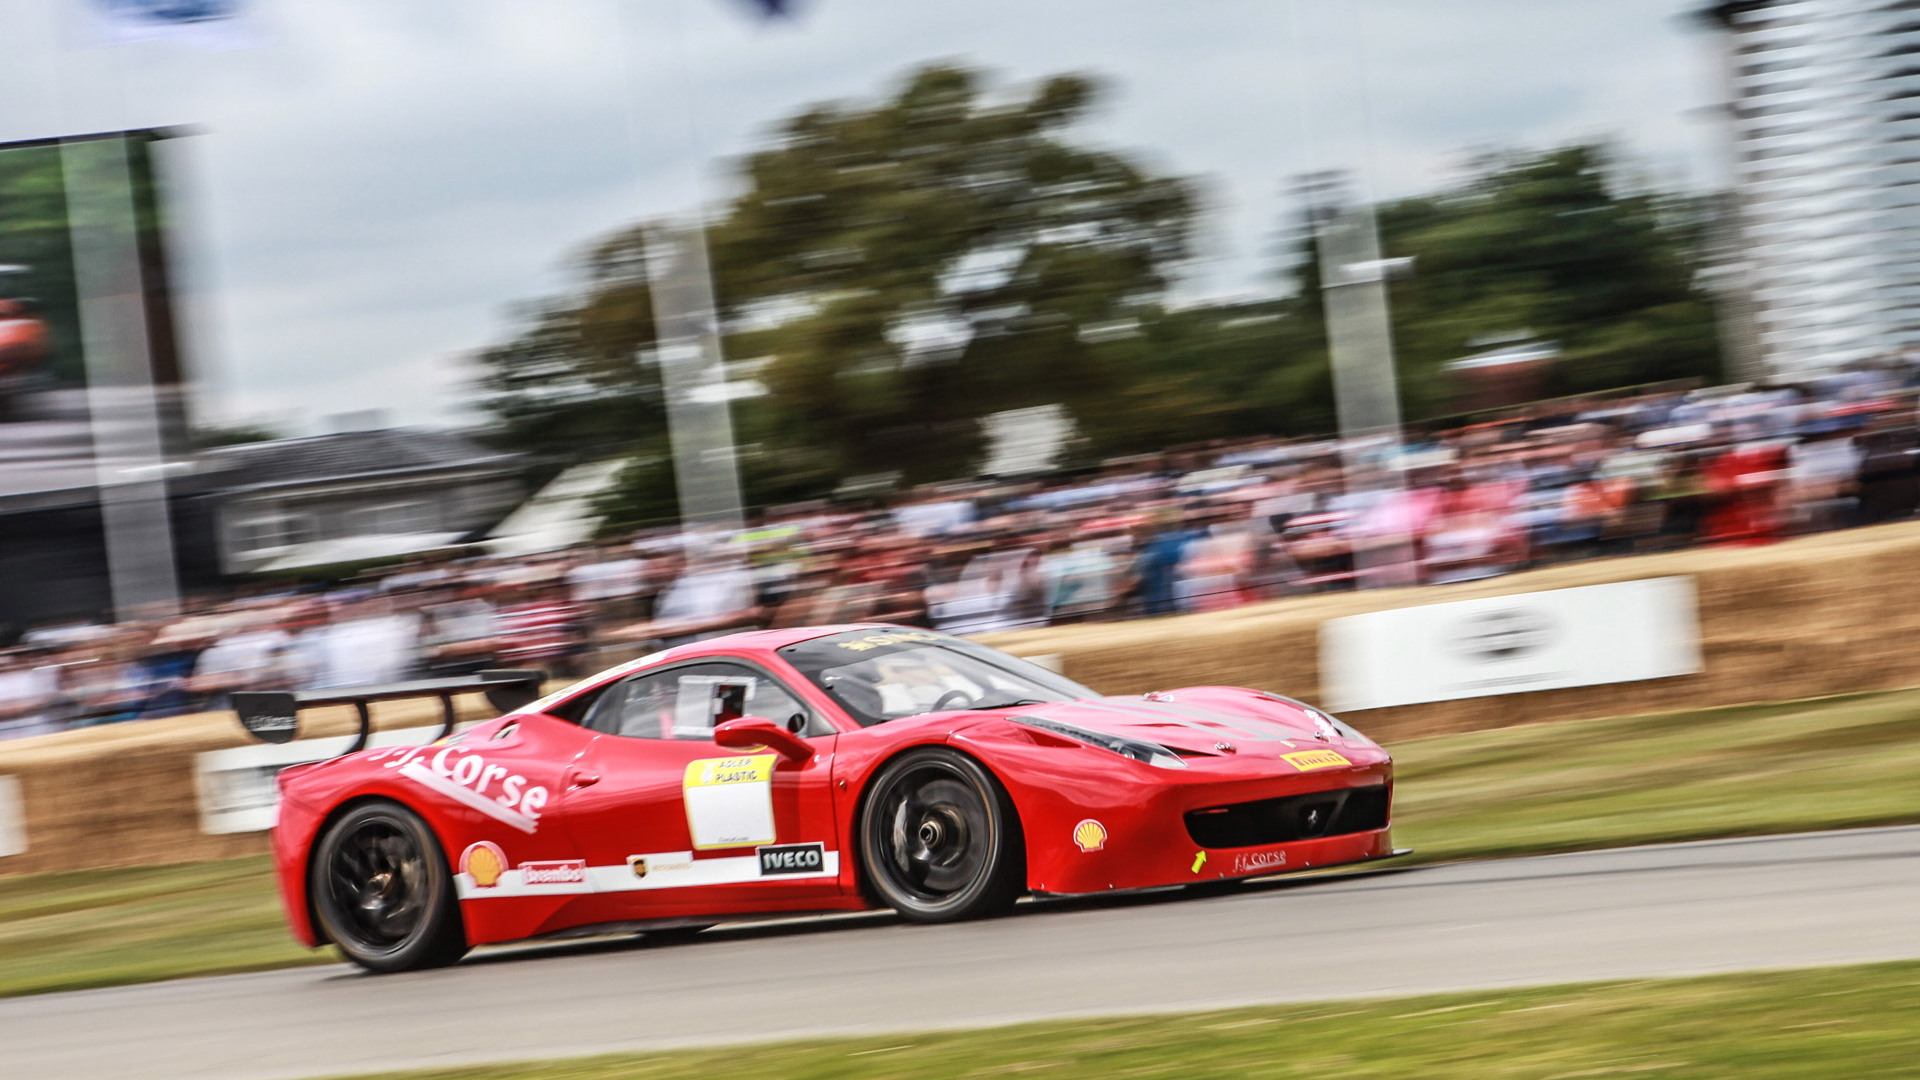 Ferrari At The 2015 Goodwood Festival Of Speed